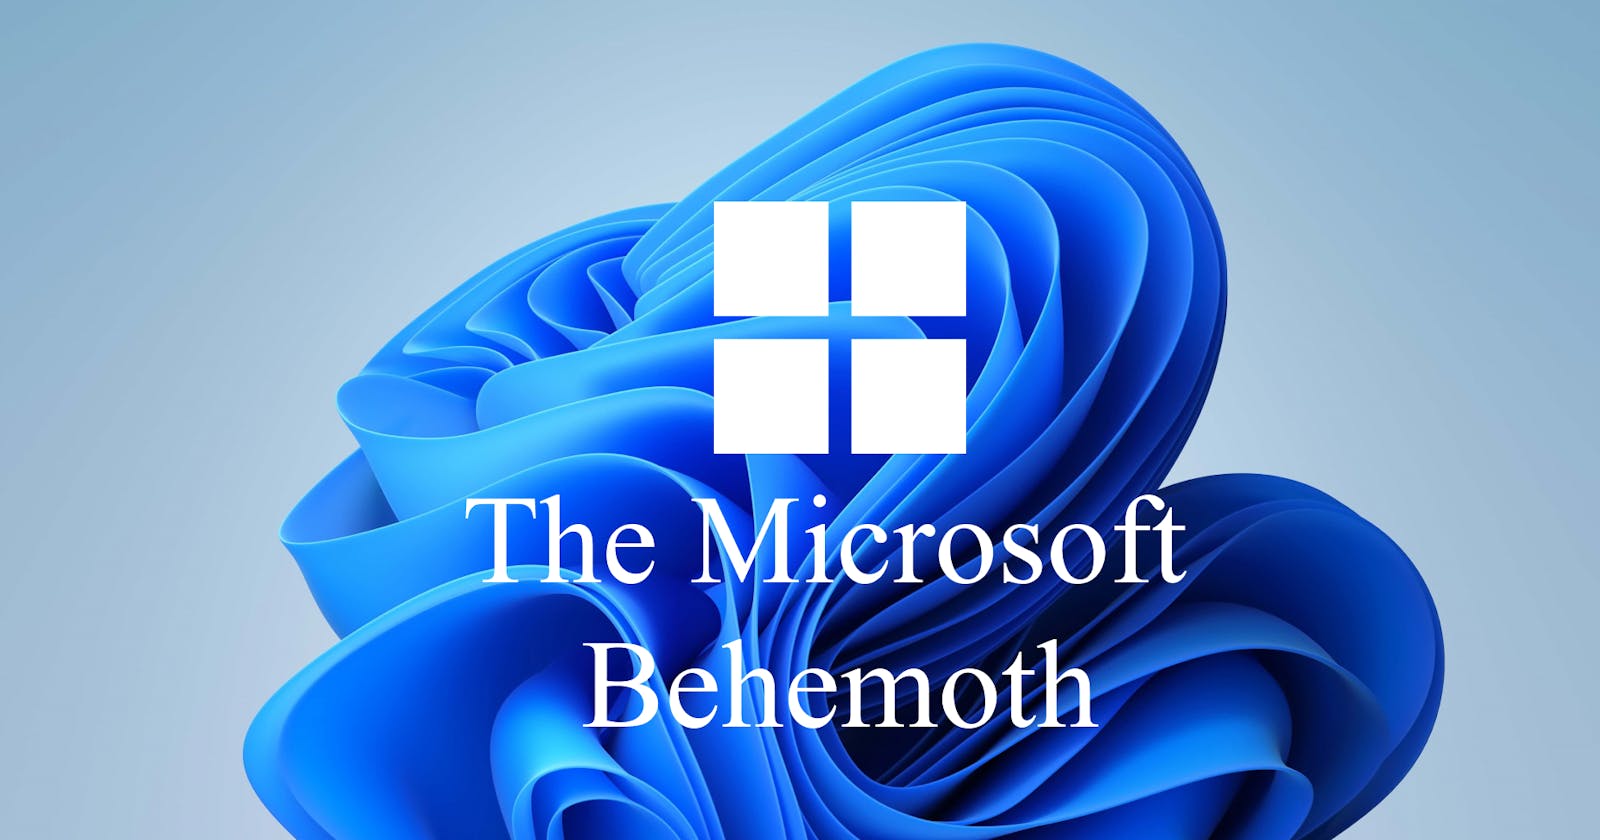 The Microsoft Behemoth